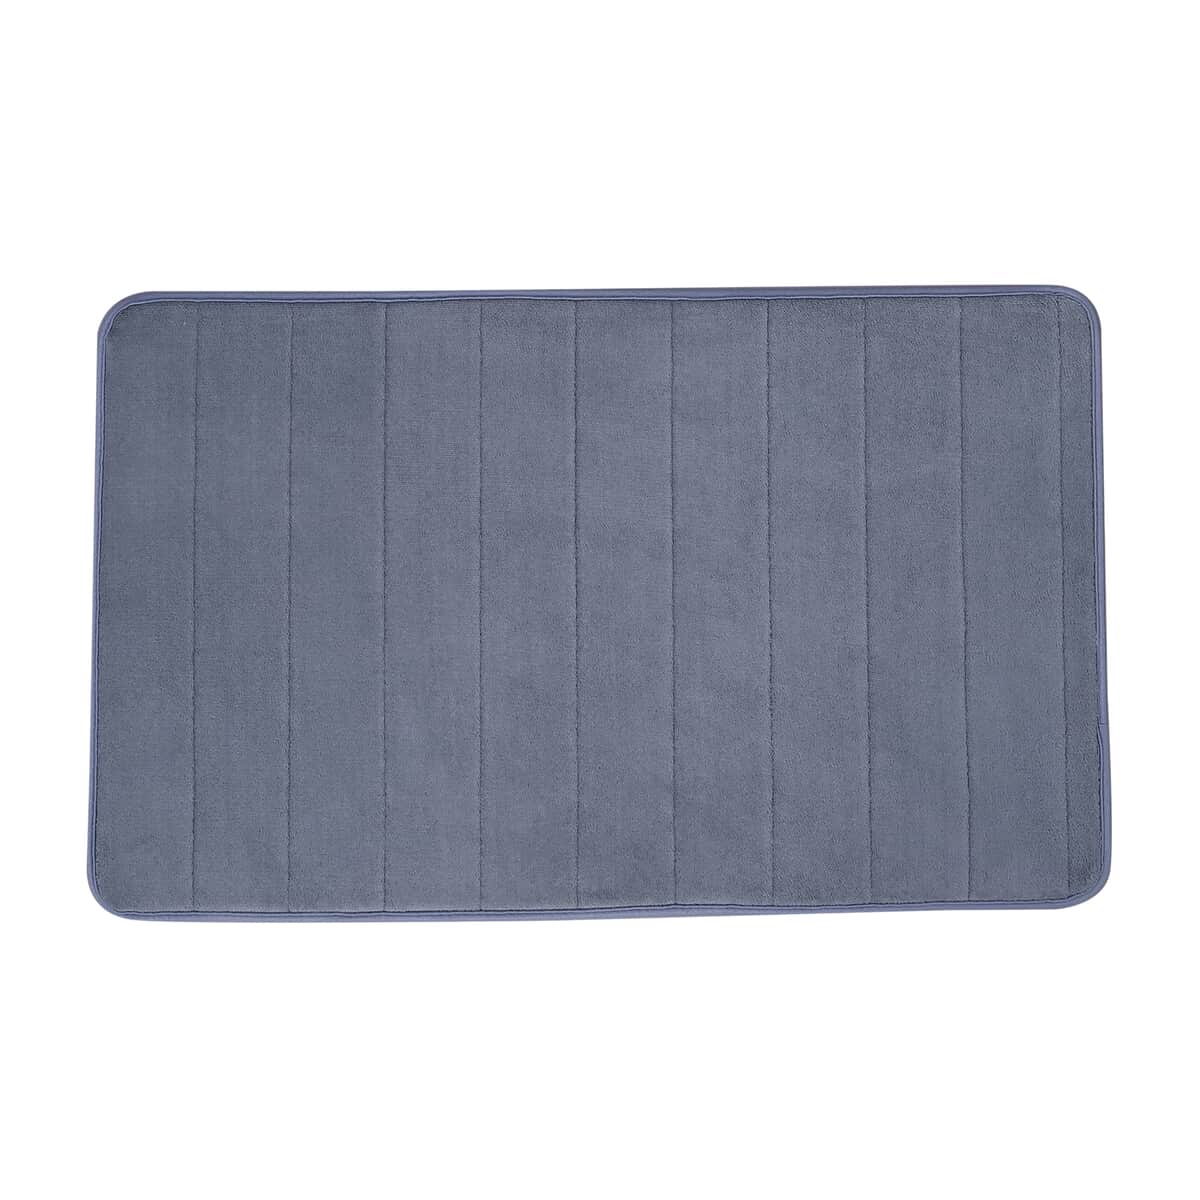 Gray Color Microfiber Anti-Slip Bathmat (19.8"x31.5") image number 0